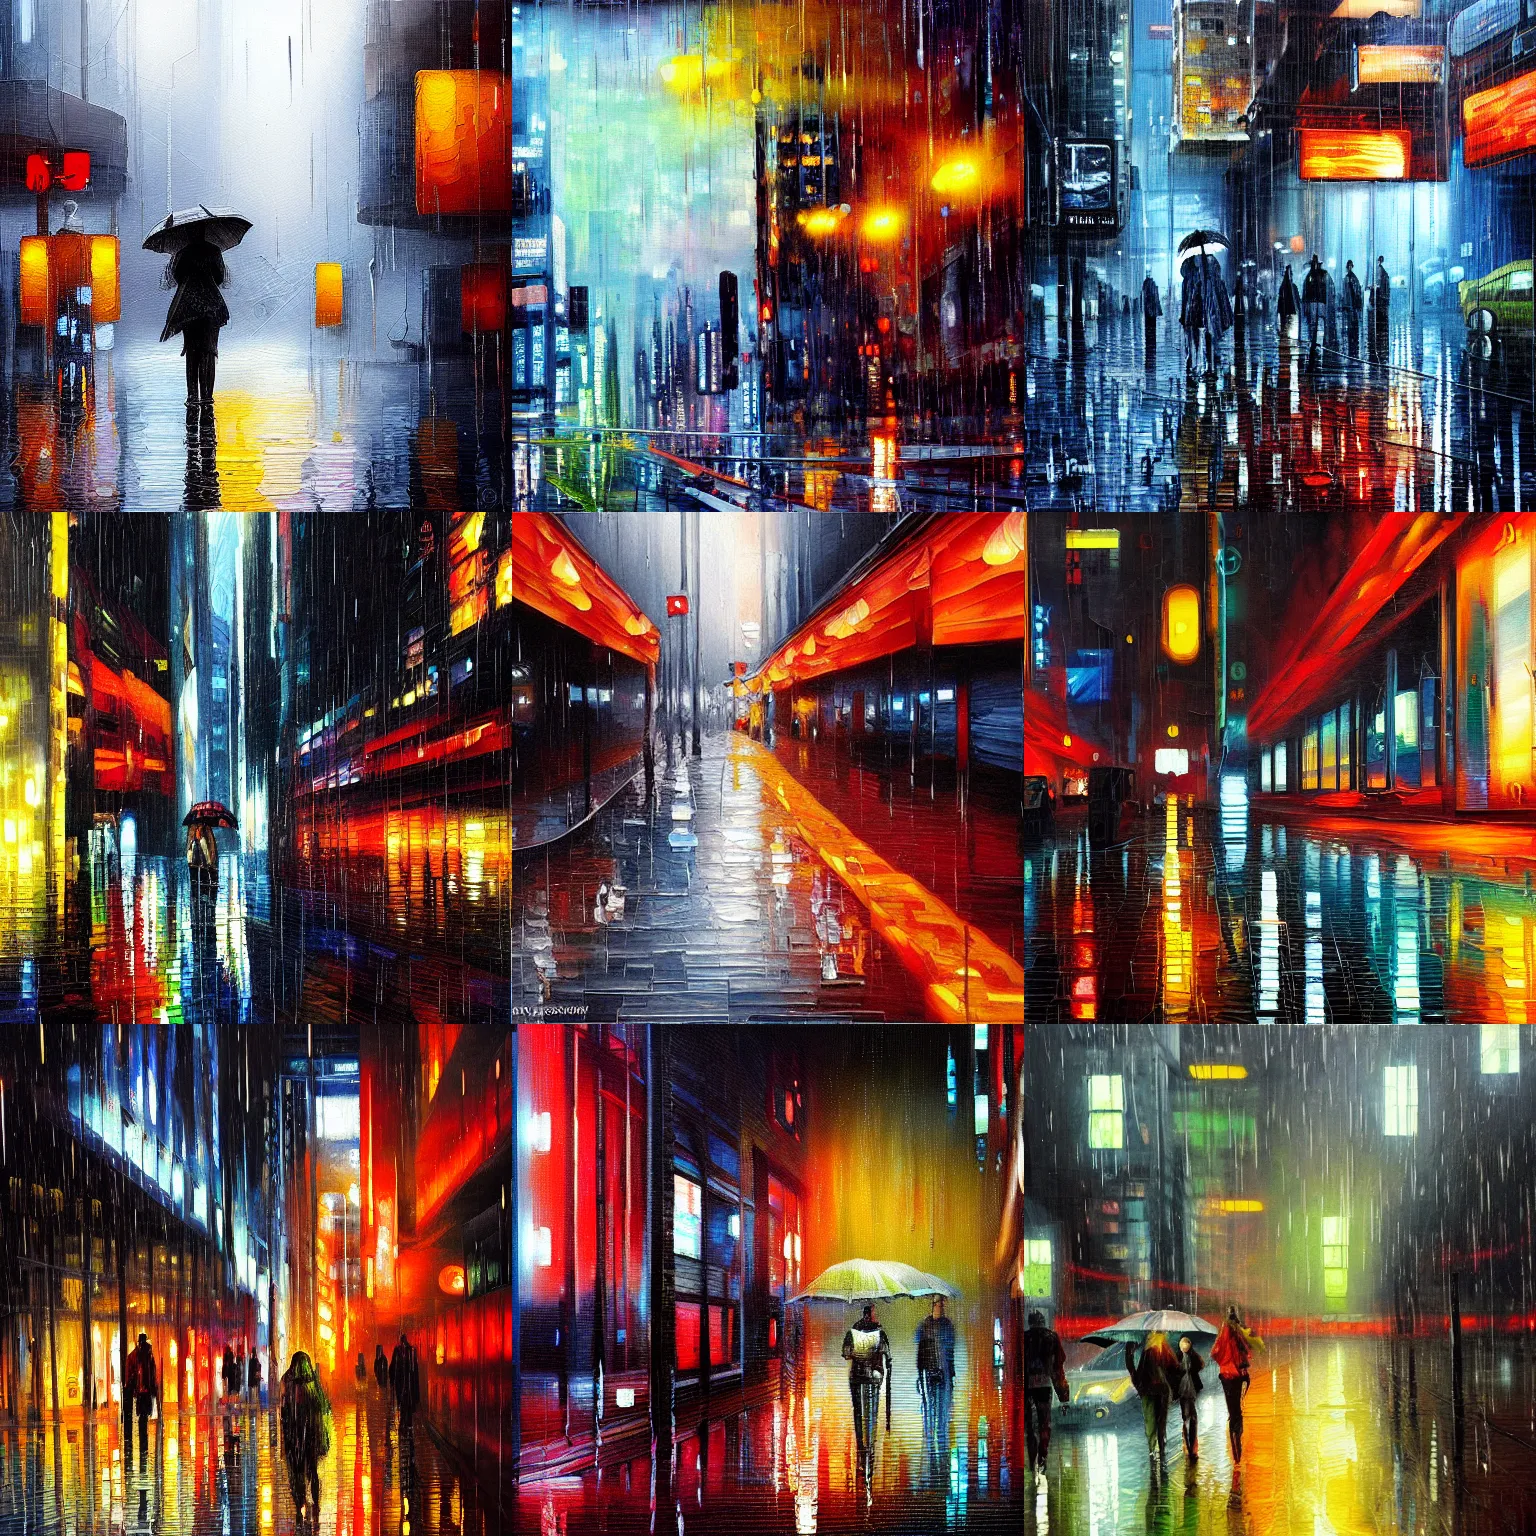 Prompt: rain like a dream, oil painting, cyberpunk